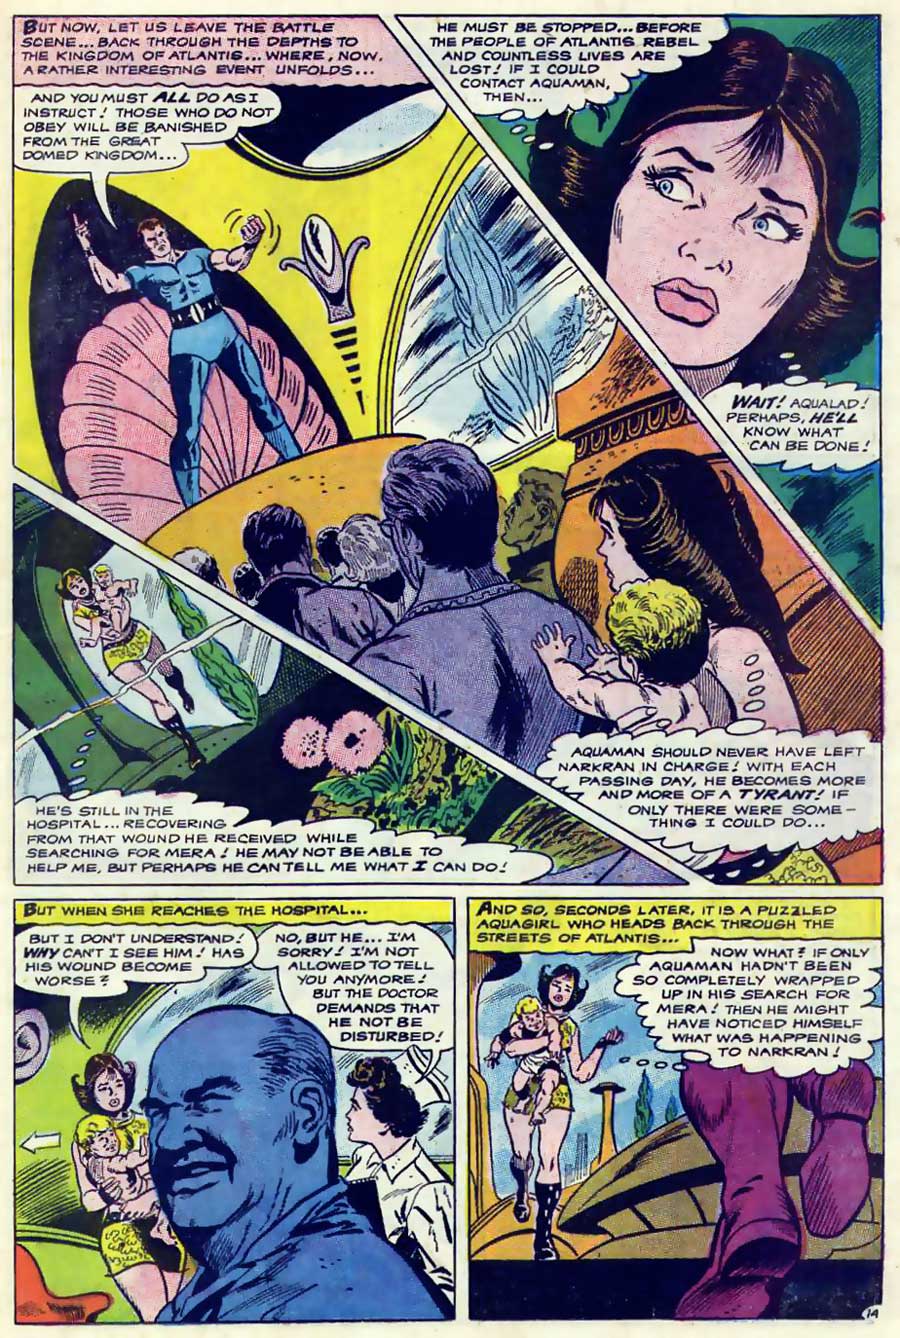 Aquaman #42 by Steve Skeates, Jim Aparo, and Dick Giordano